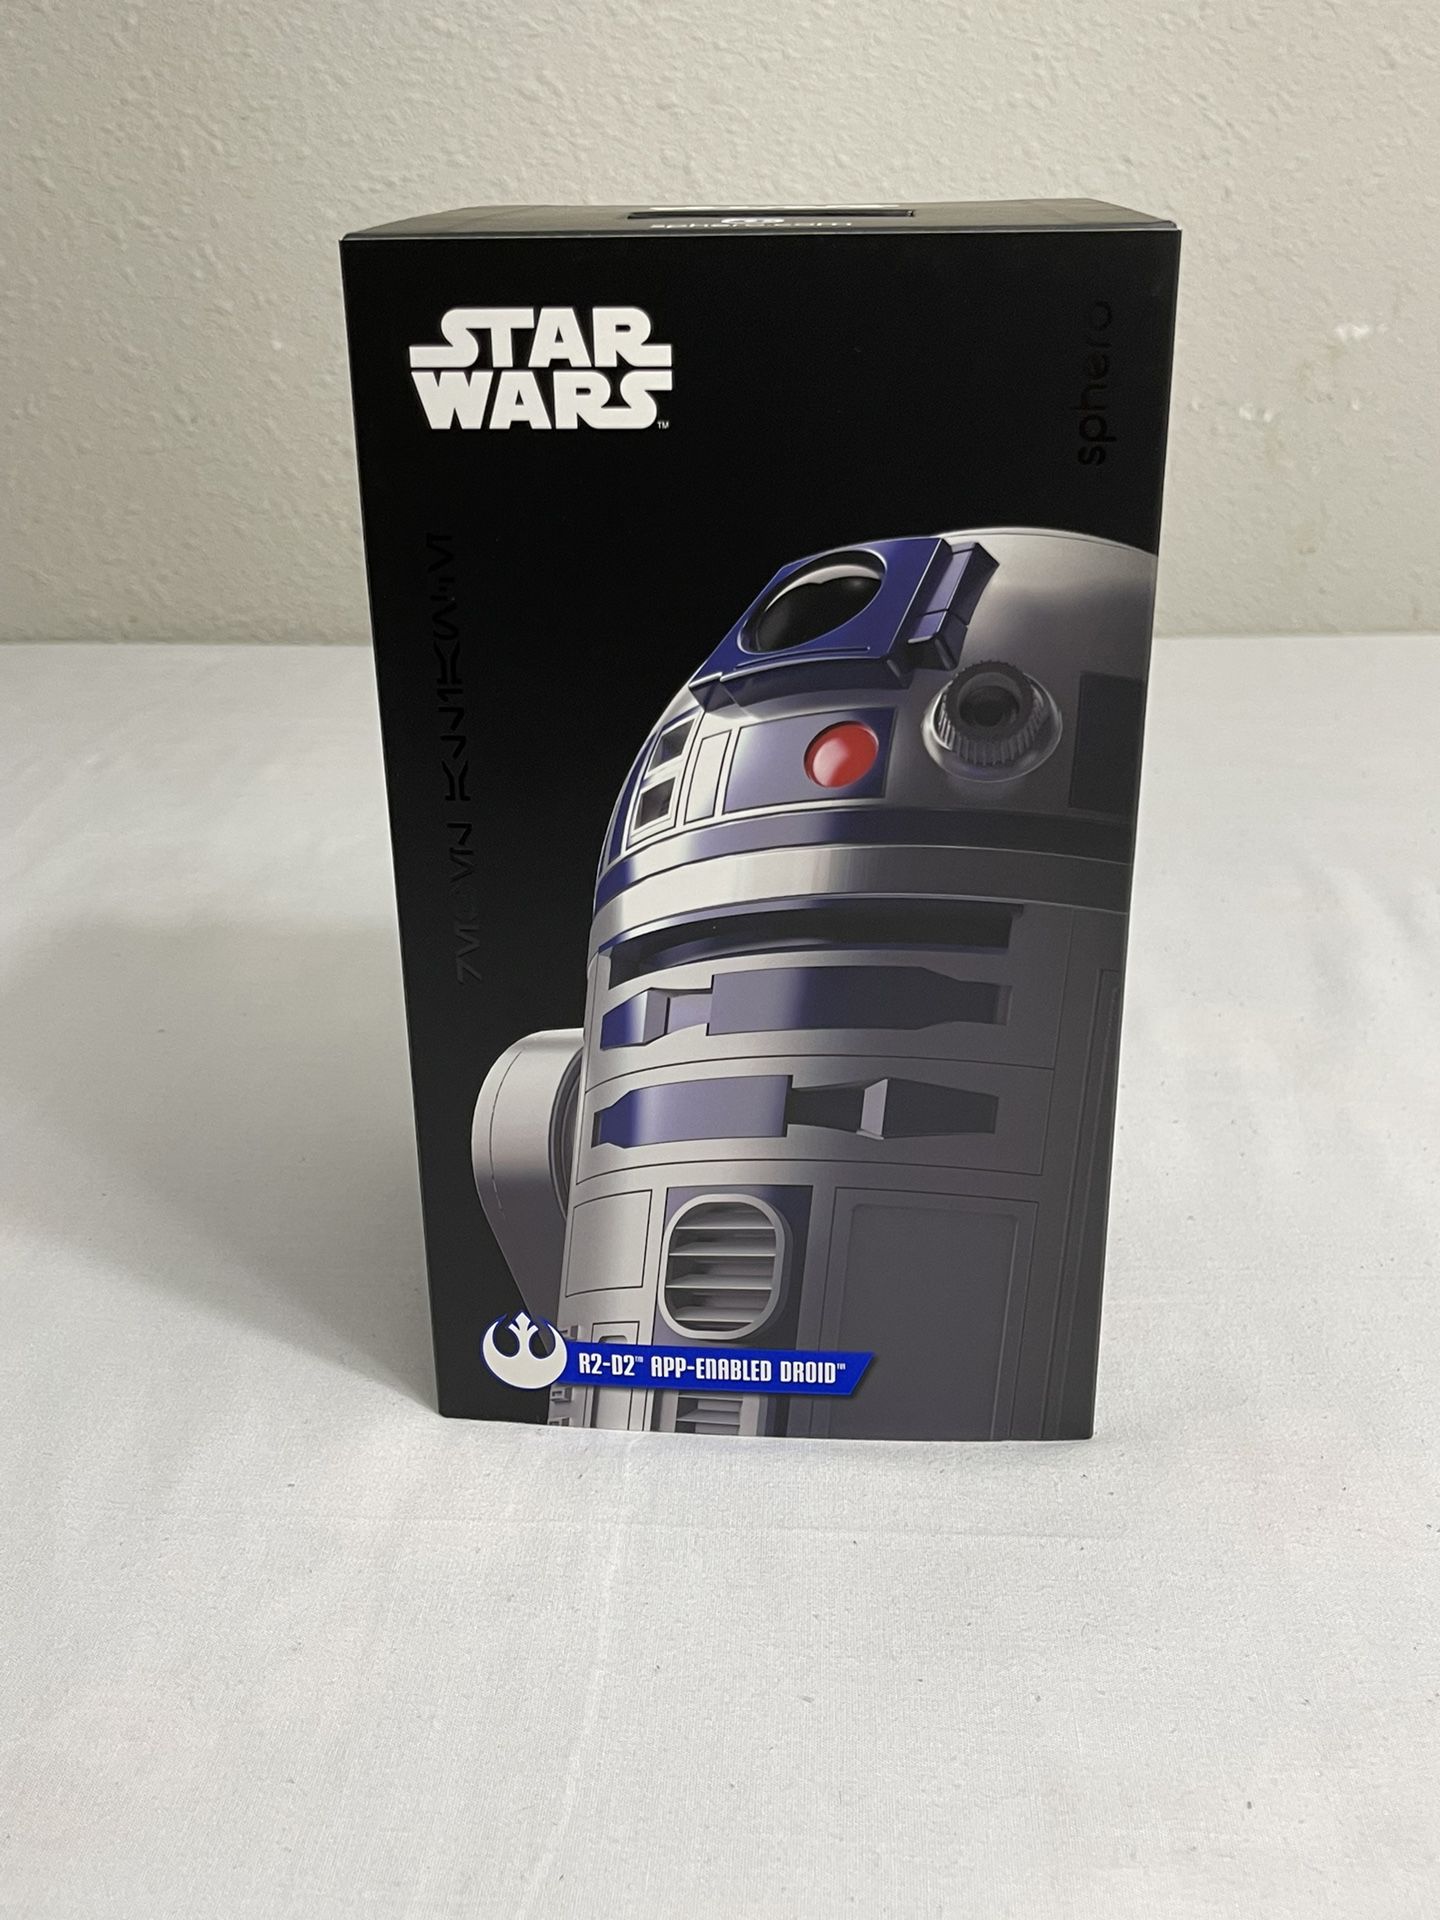 Star Wars R2-D2 App-Enabled Droid .